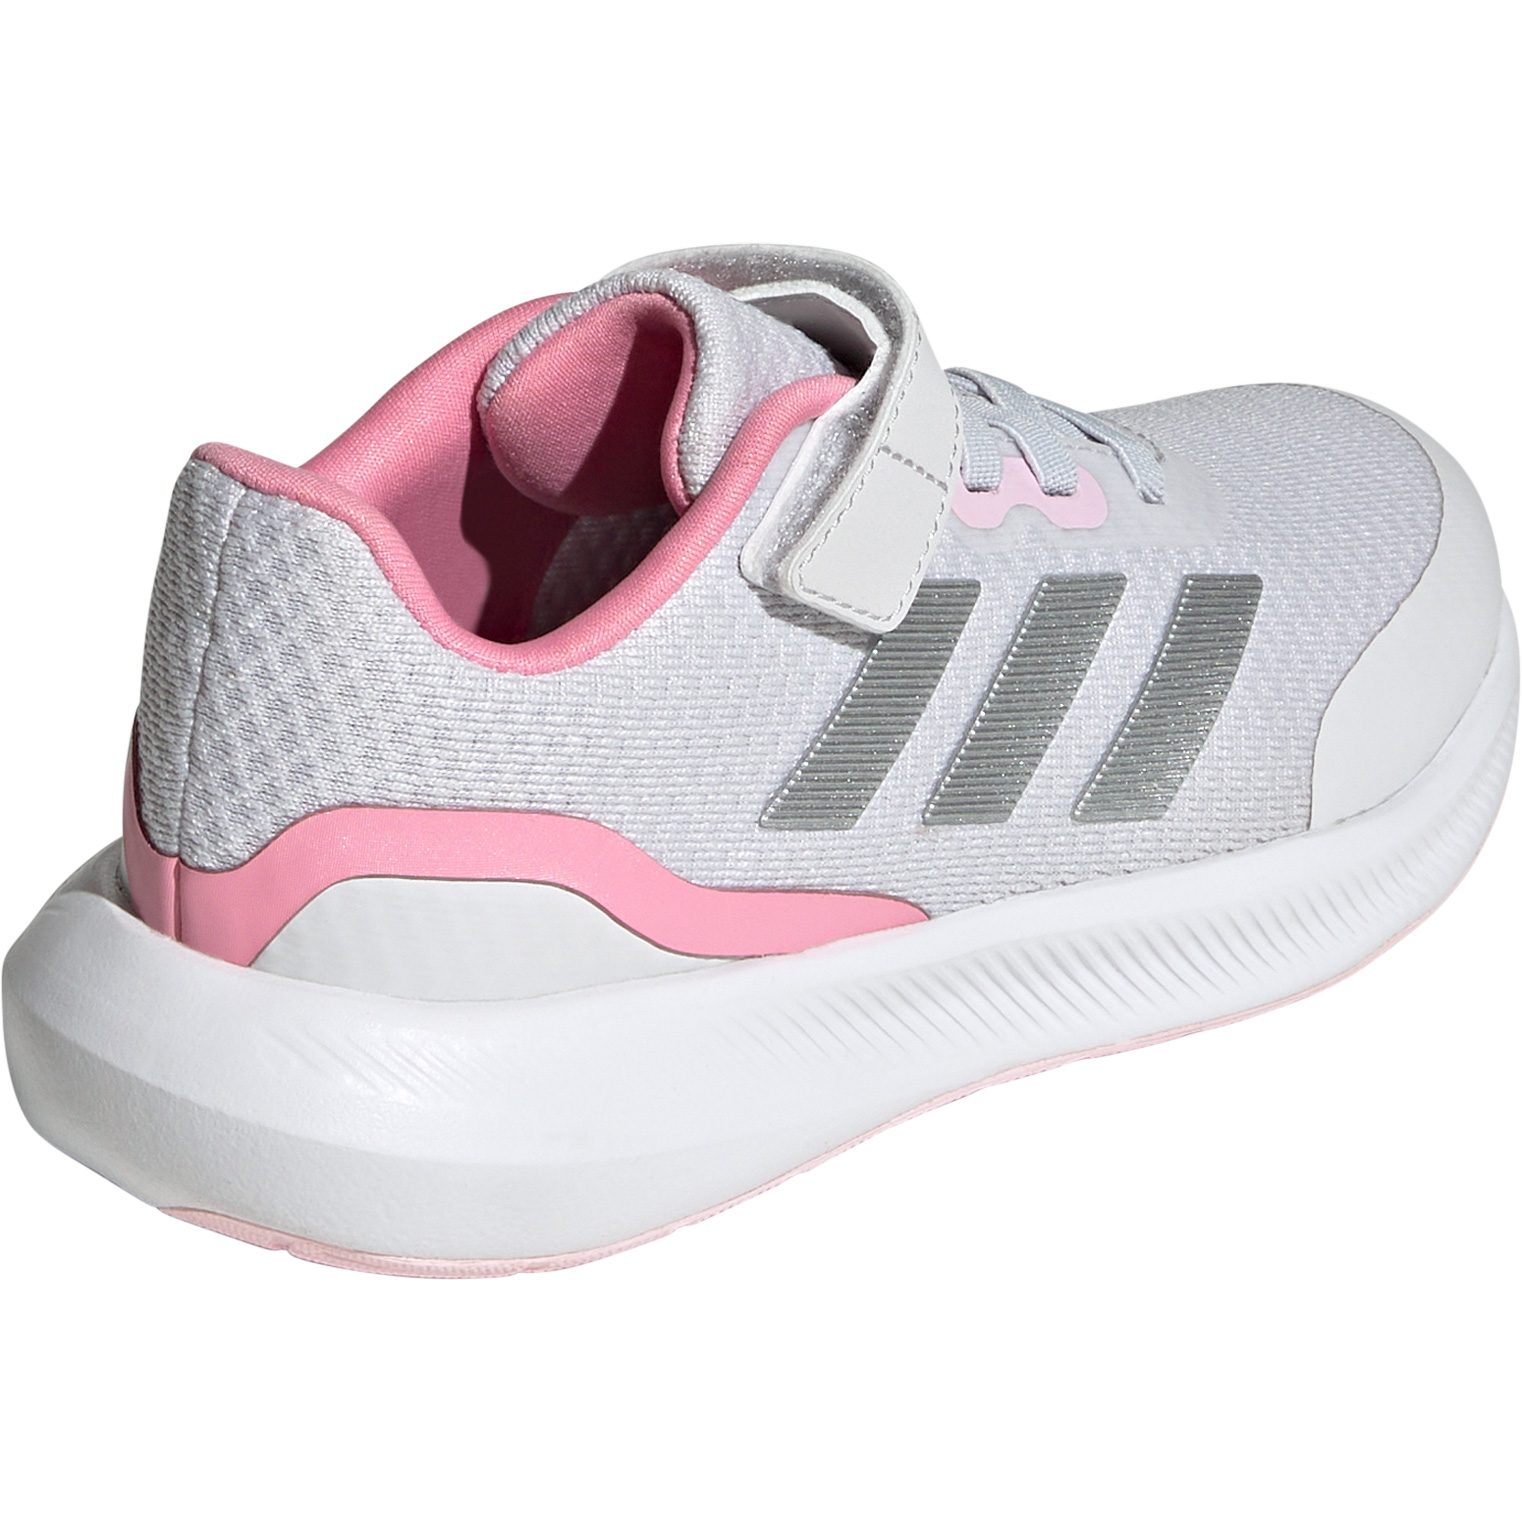 adidas - RunFalcon 3.0 Elastic Kids at Shoes grey Running Top Bittl Shop Sport Lace Strap dash